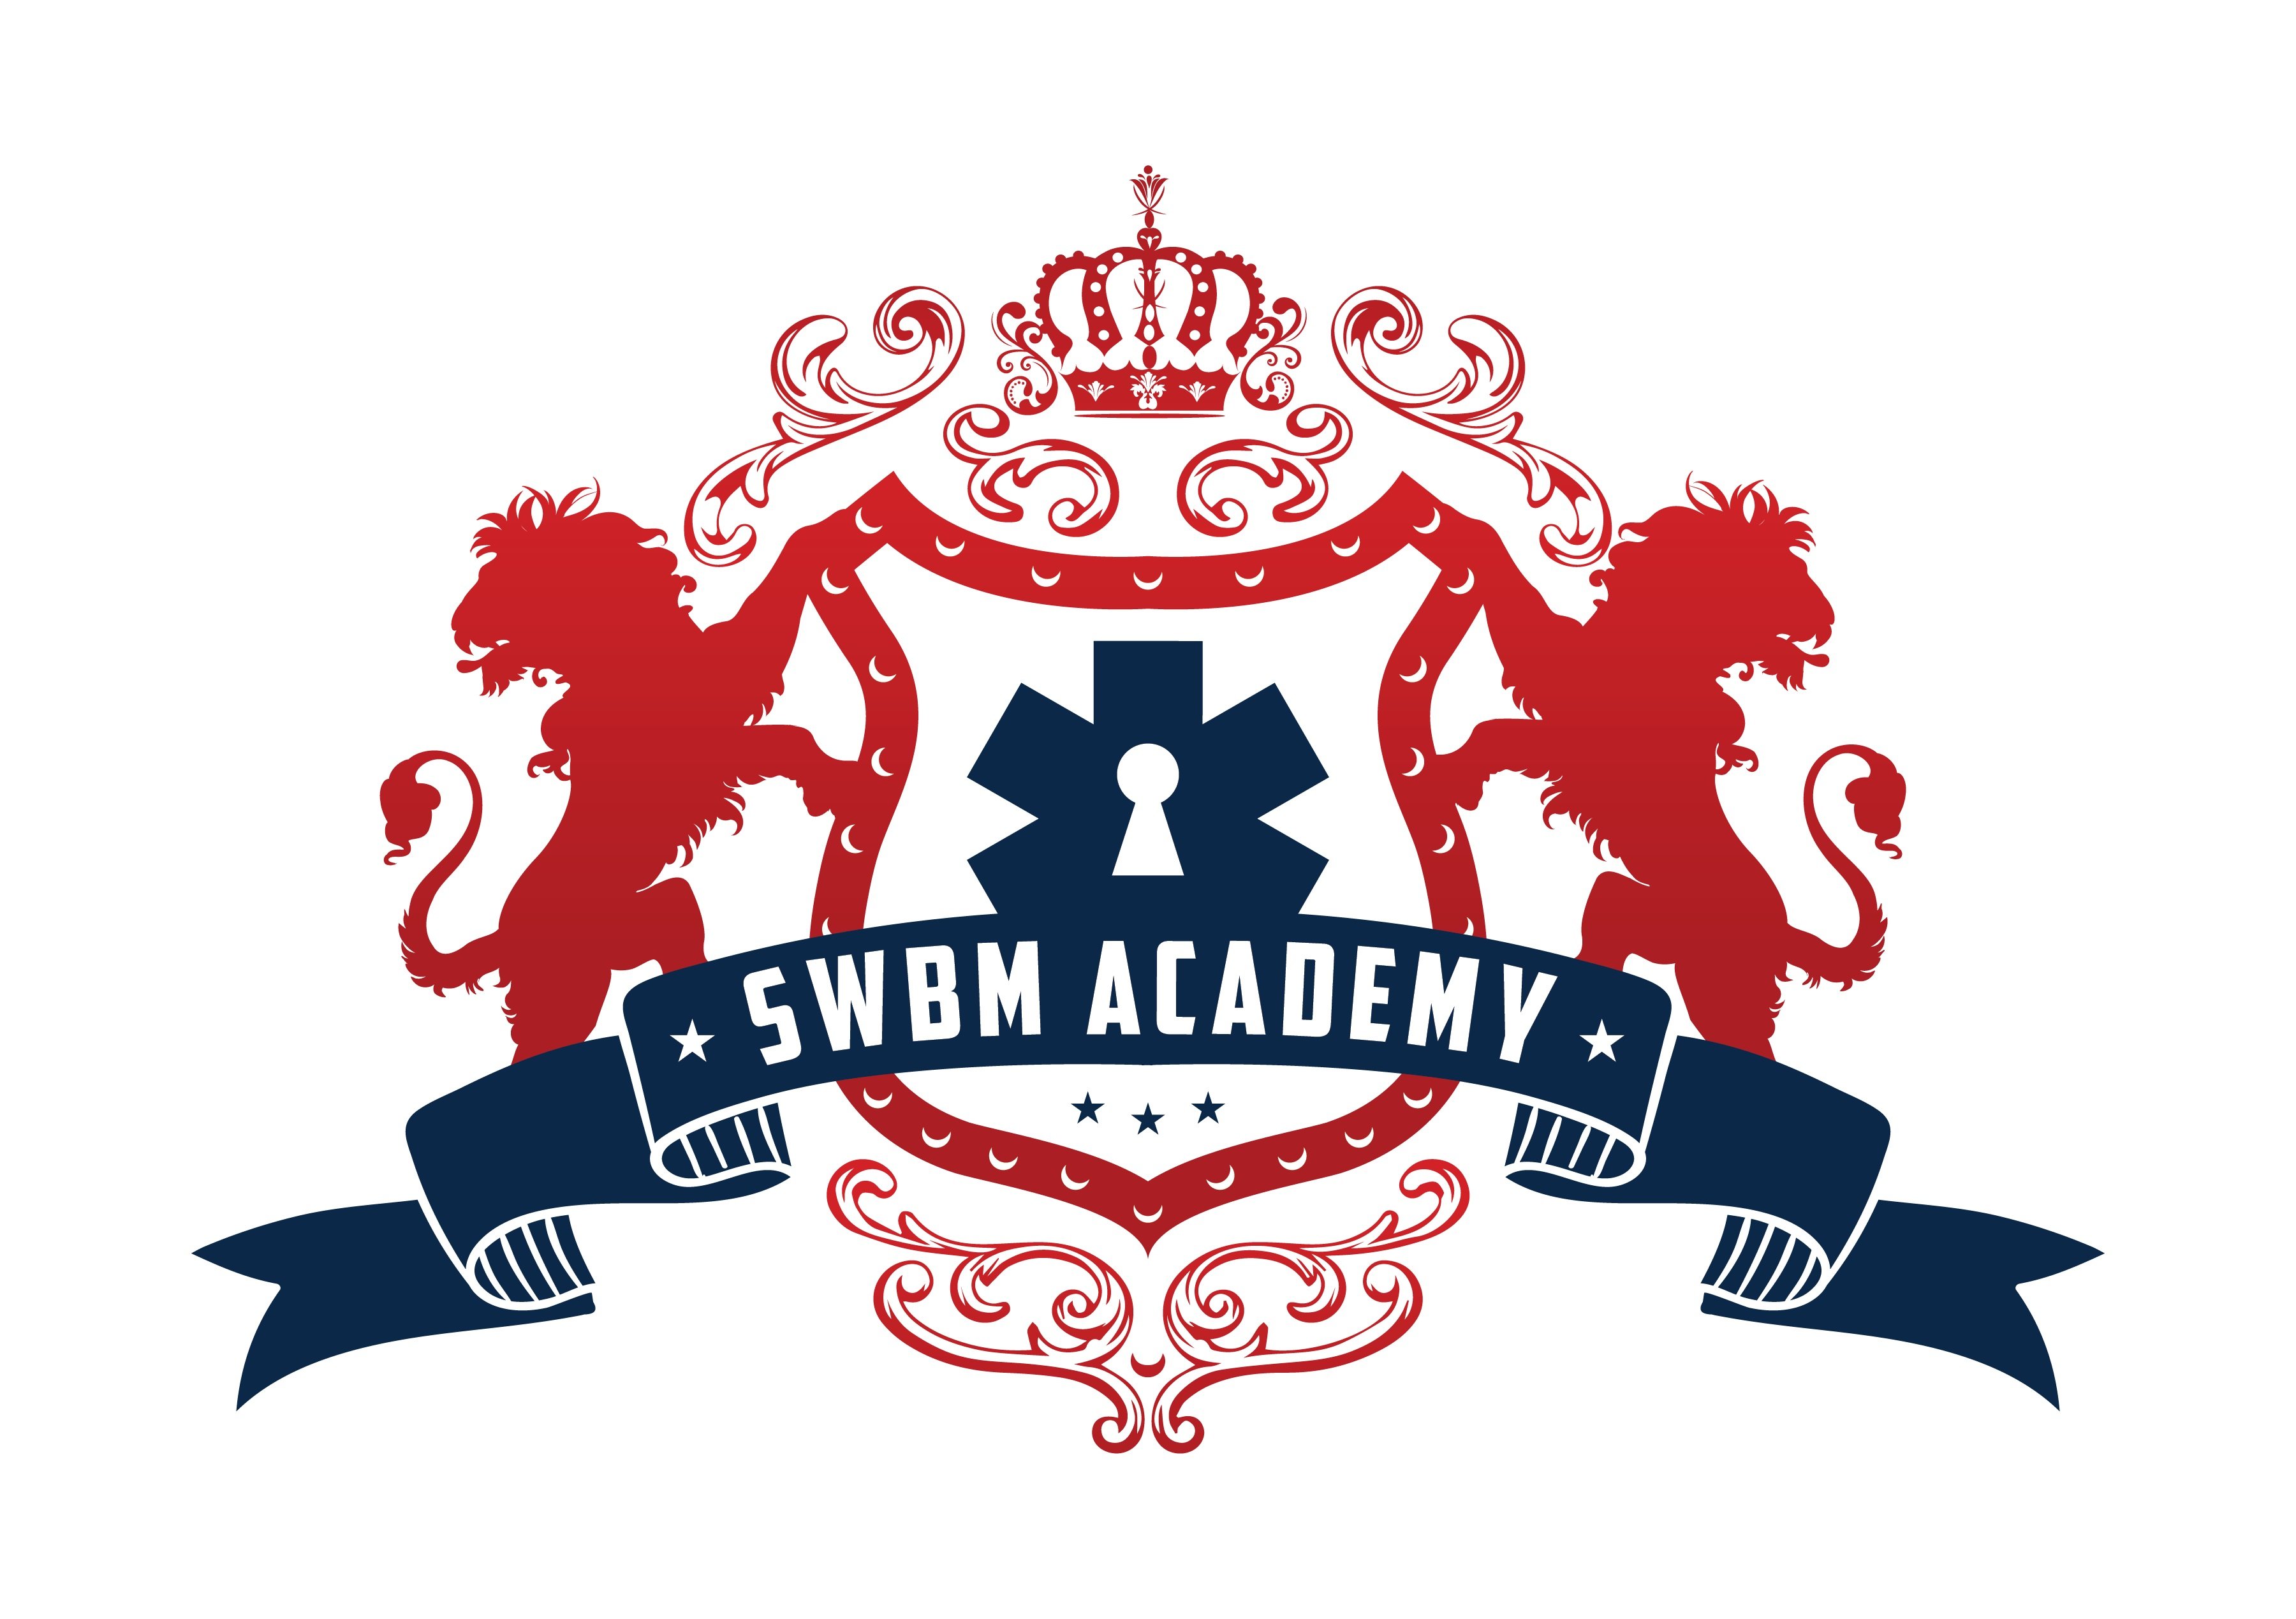 SWBM ACADEMY logo